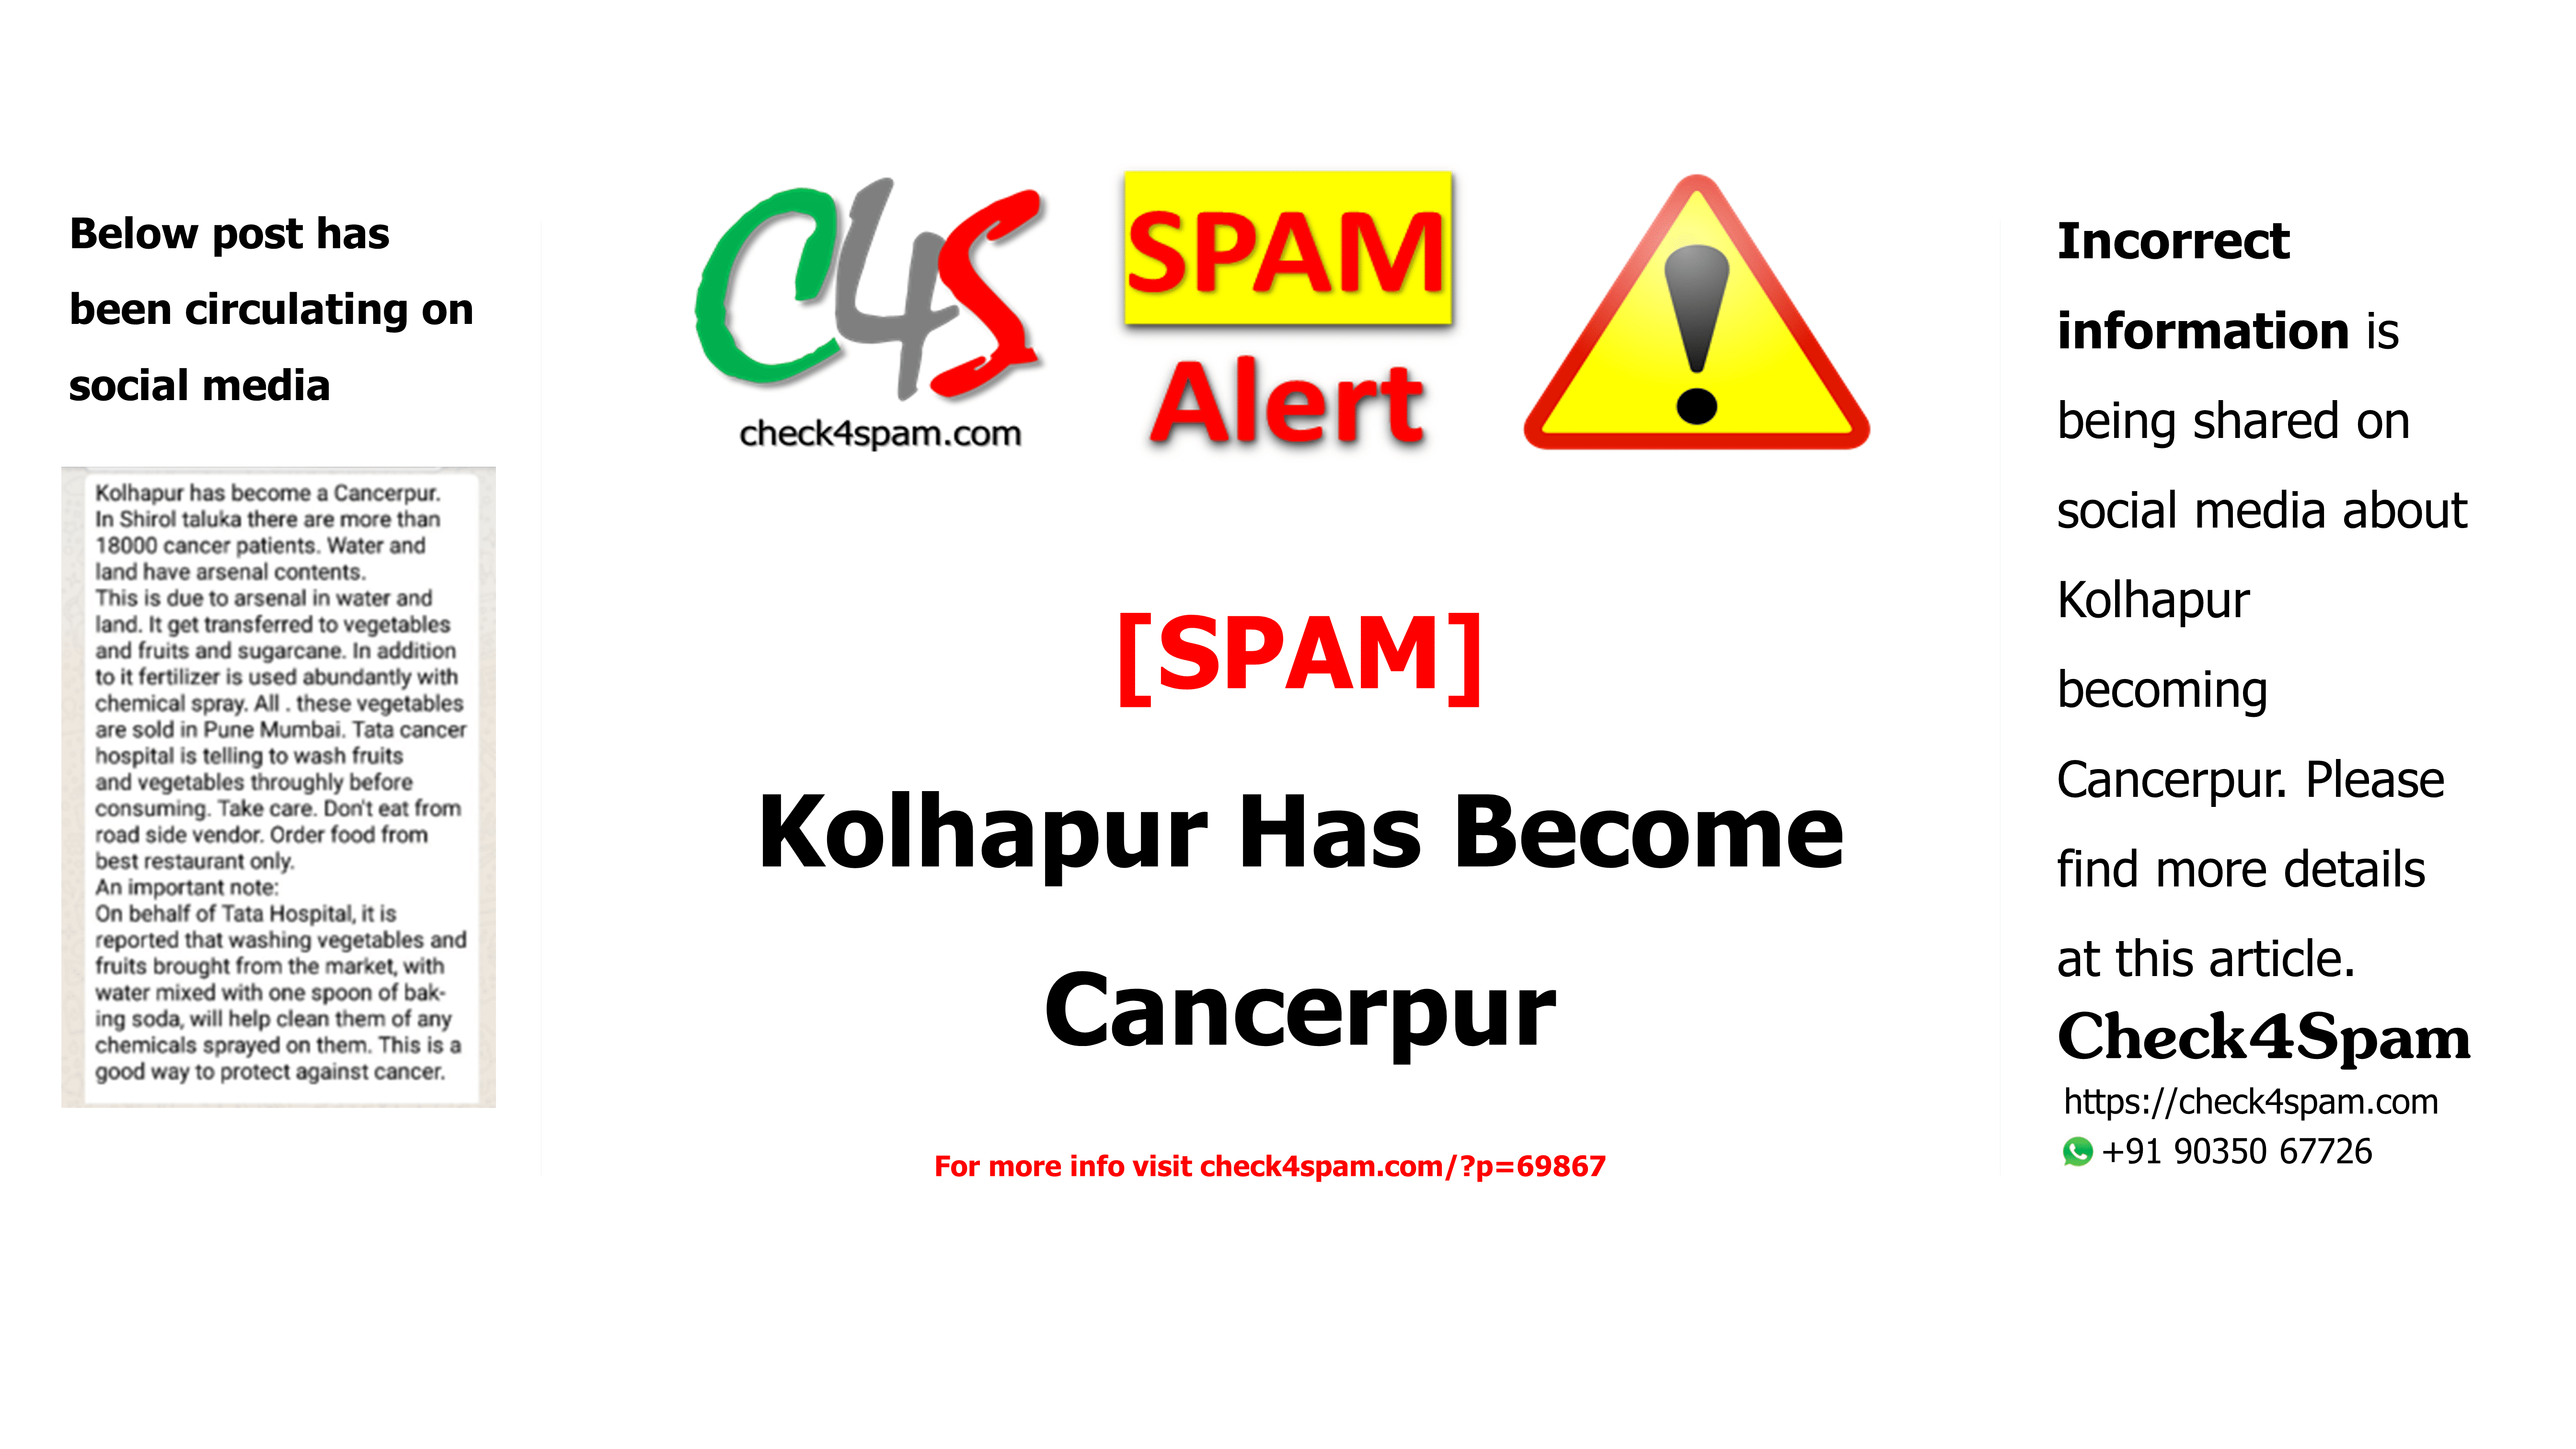 [SPAM] Kolhapur Has Become Cancerpur